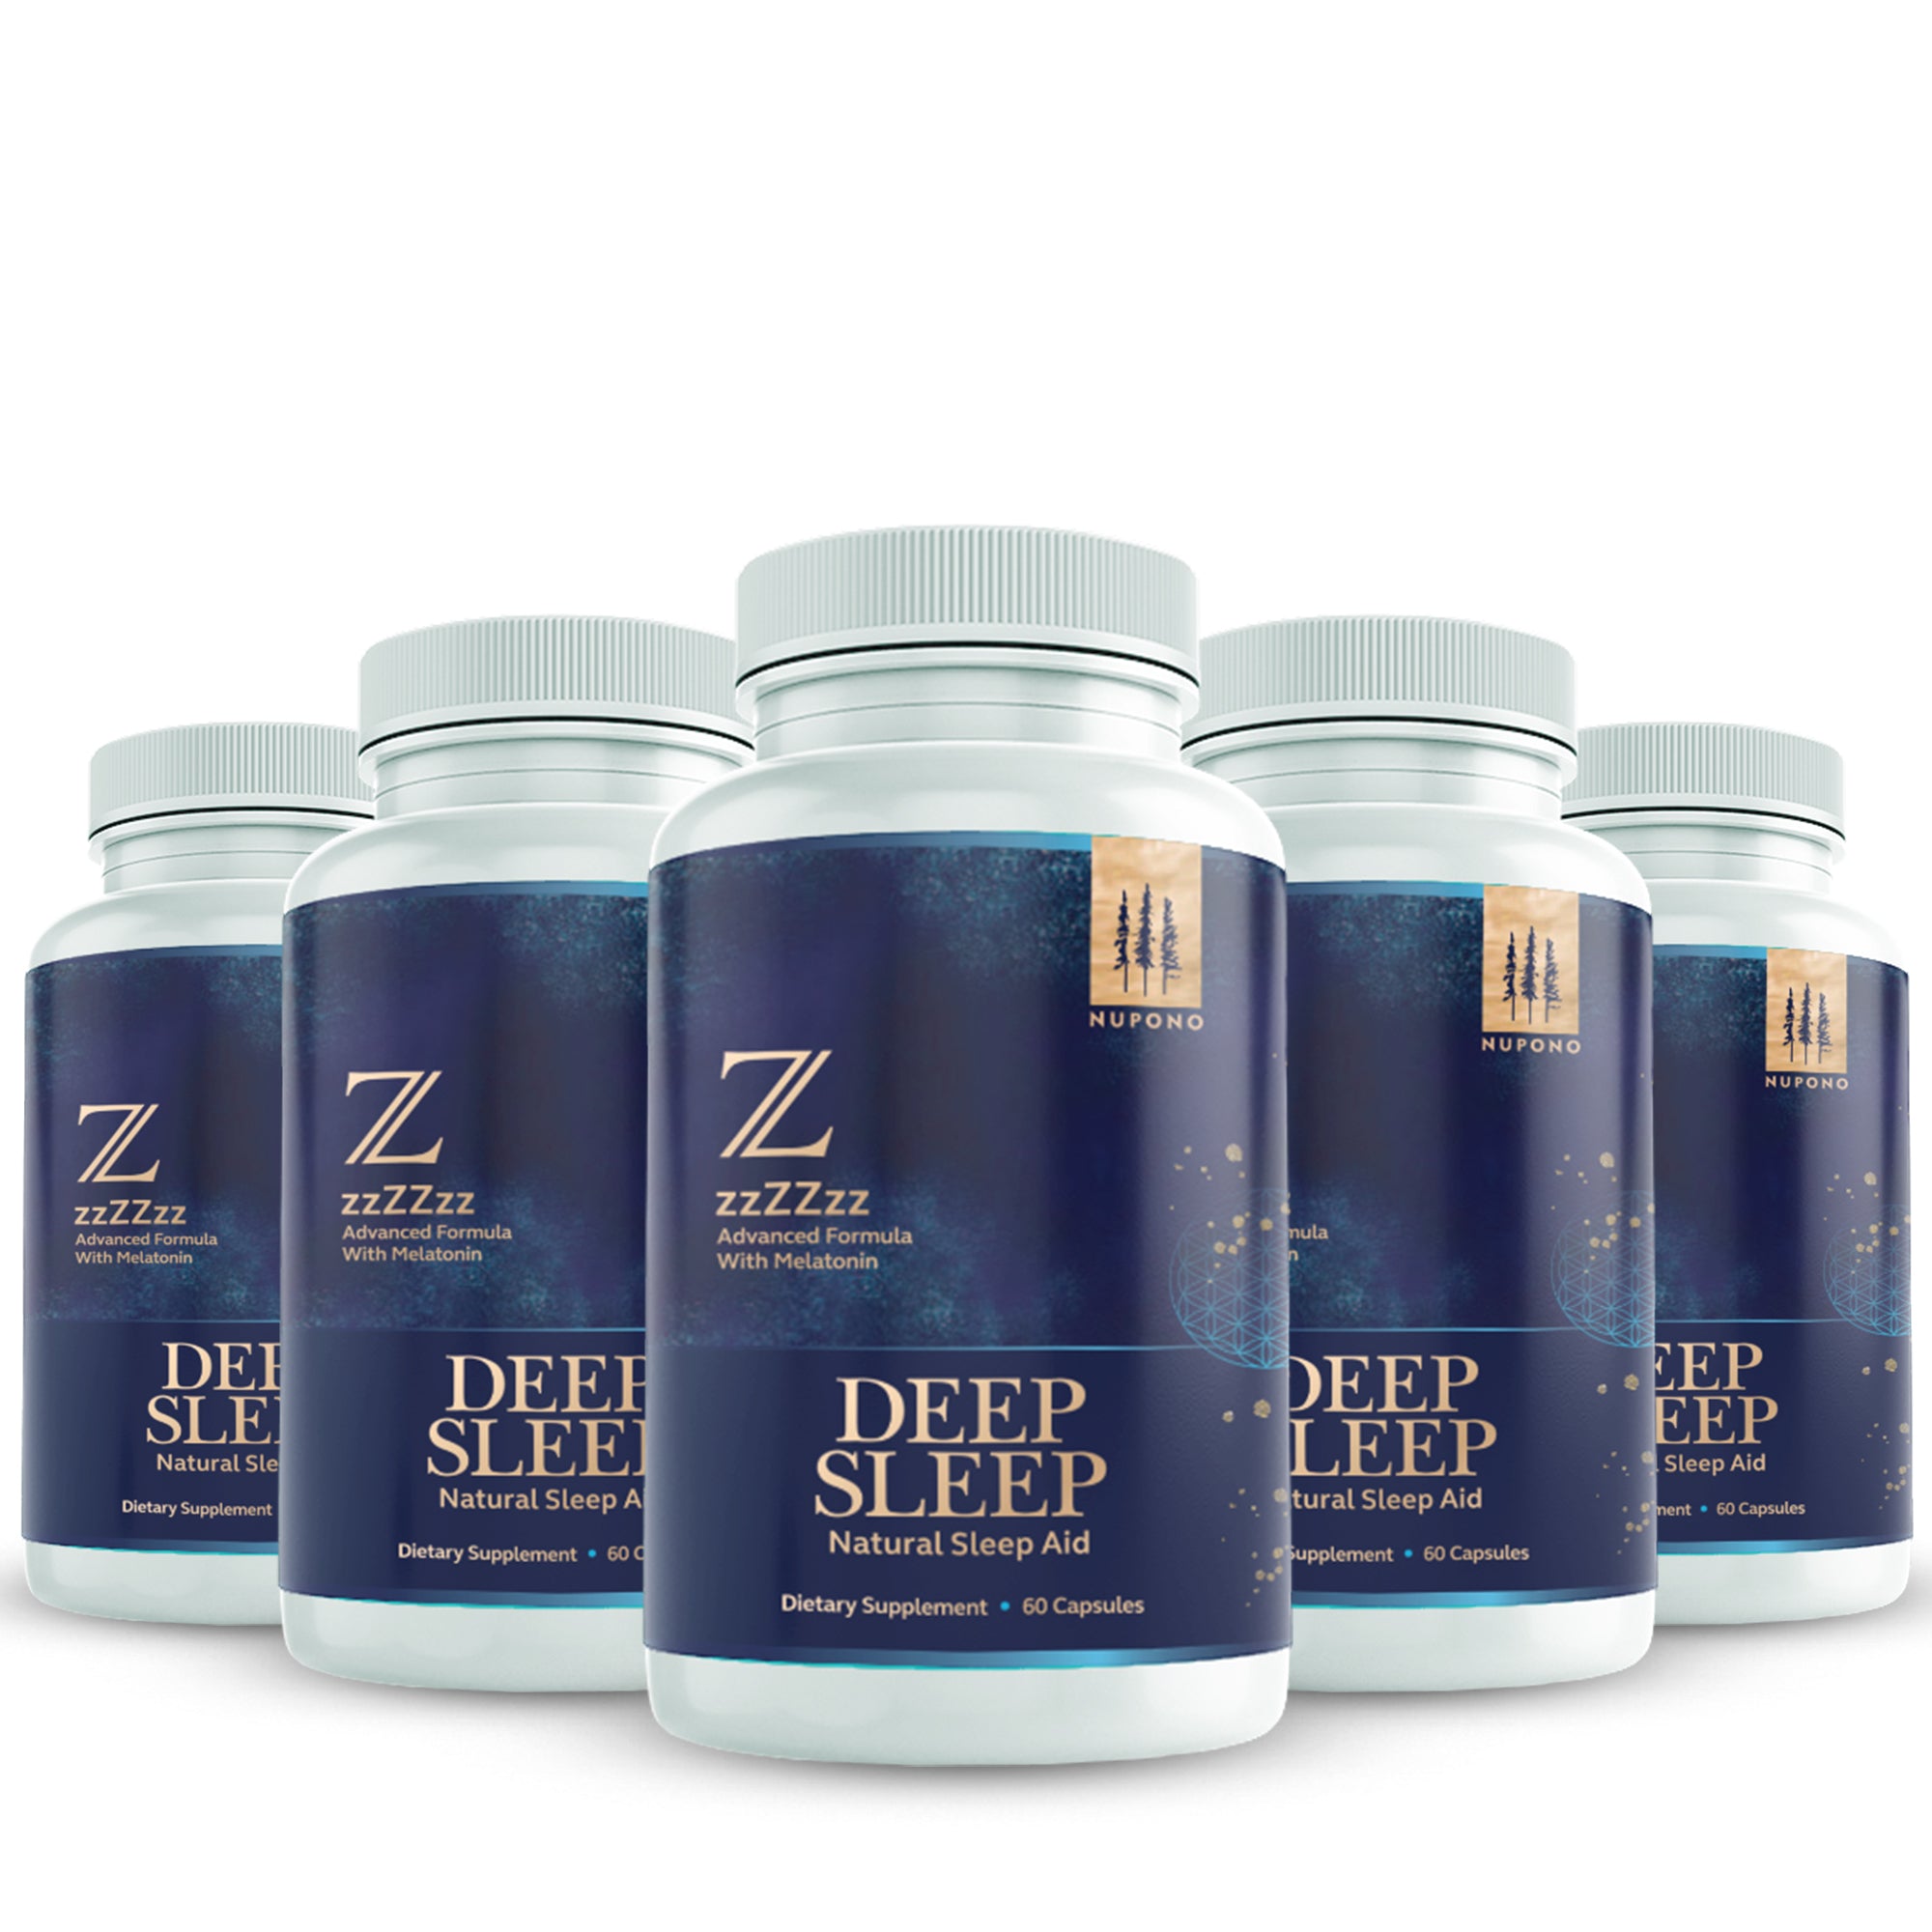 Deep Sleep Support 60 Capsules - Rest & Relaxation, Sleep and Next Day Focus, Valerian Root, L-Tryptophan, Lemon Balm, Melatonin